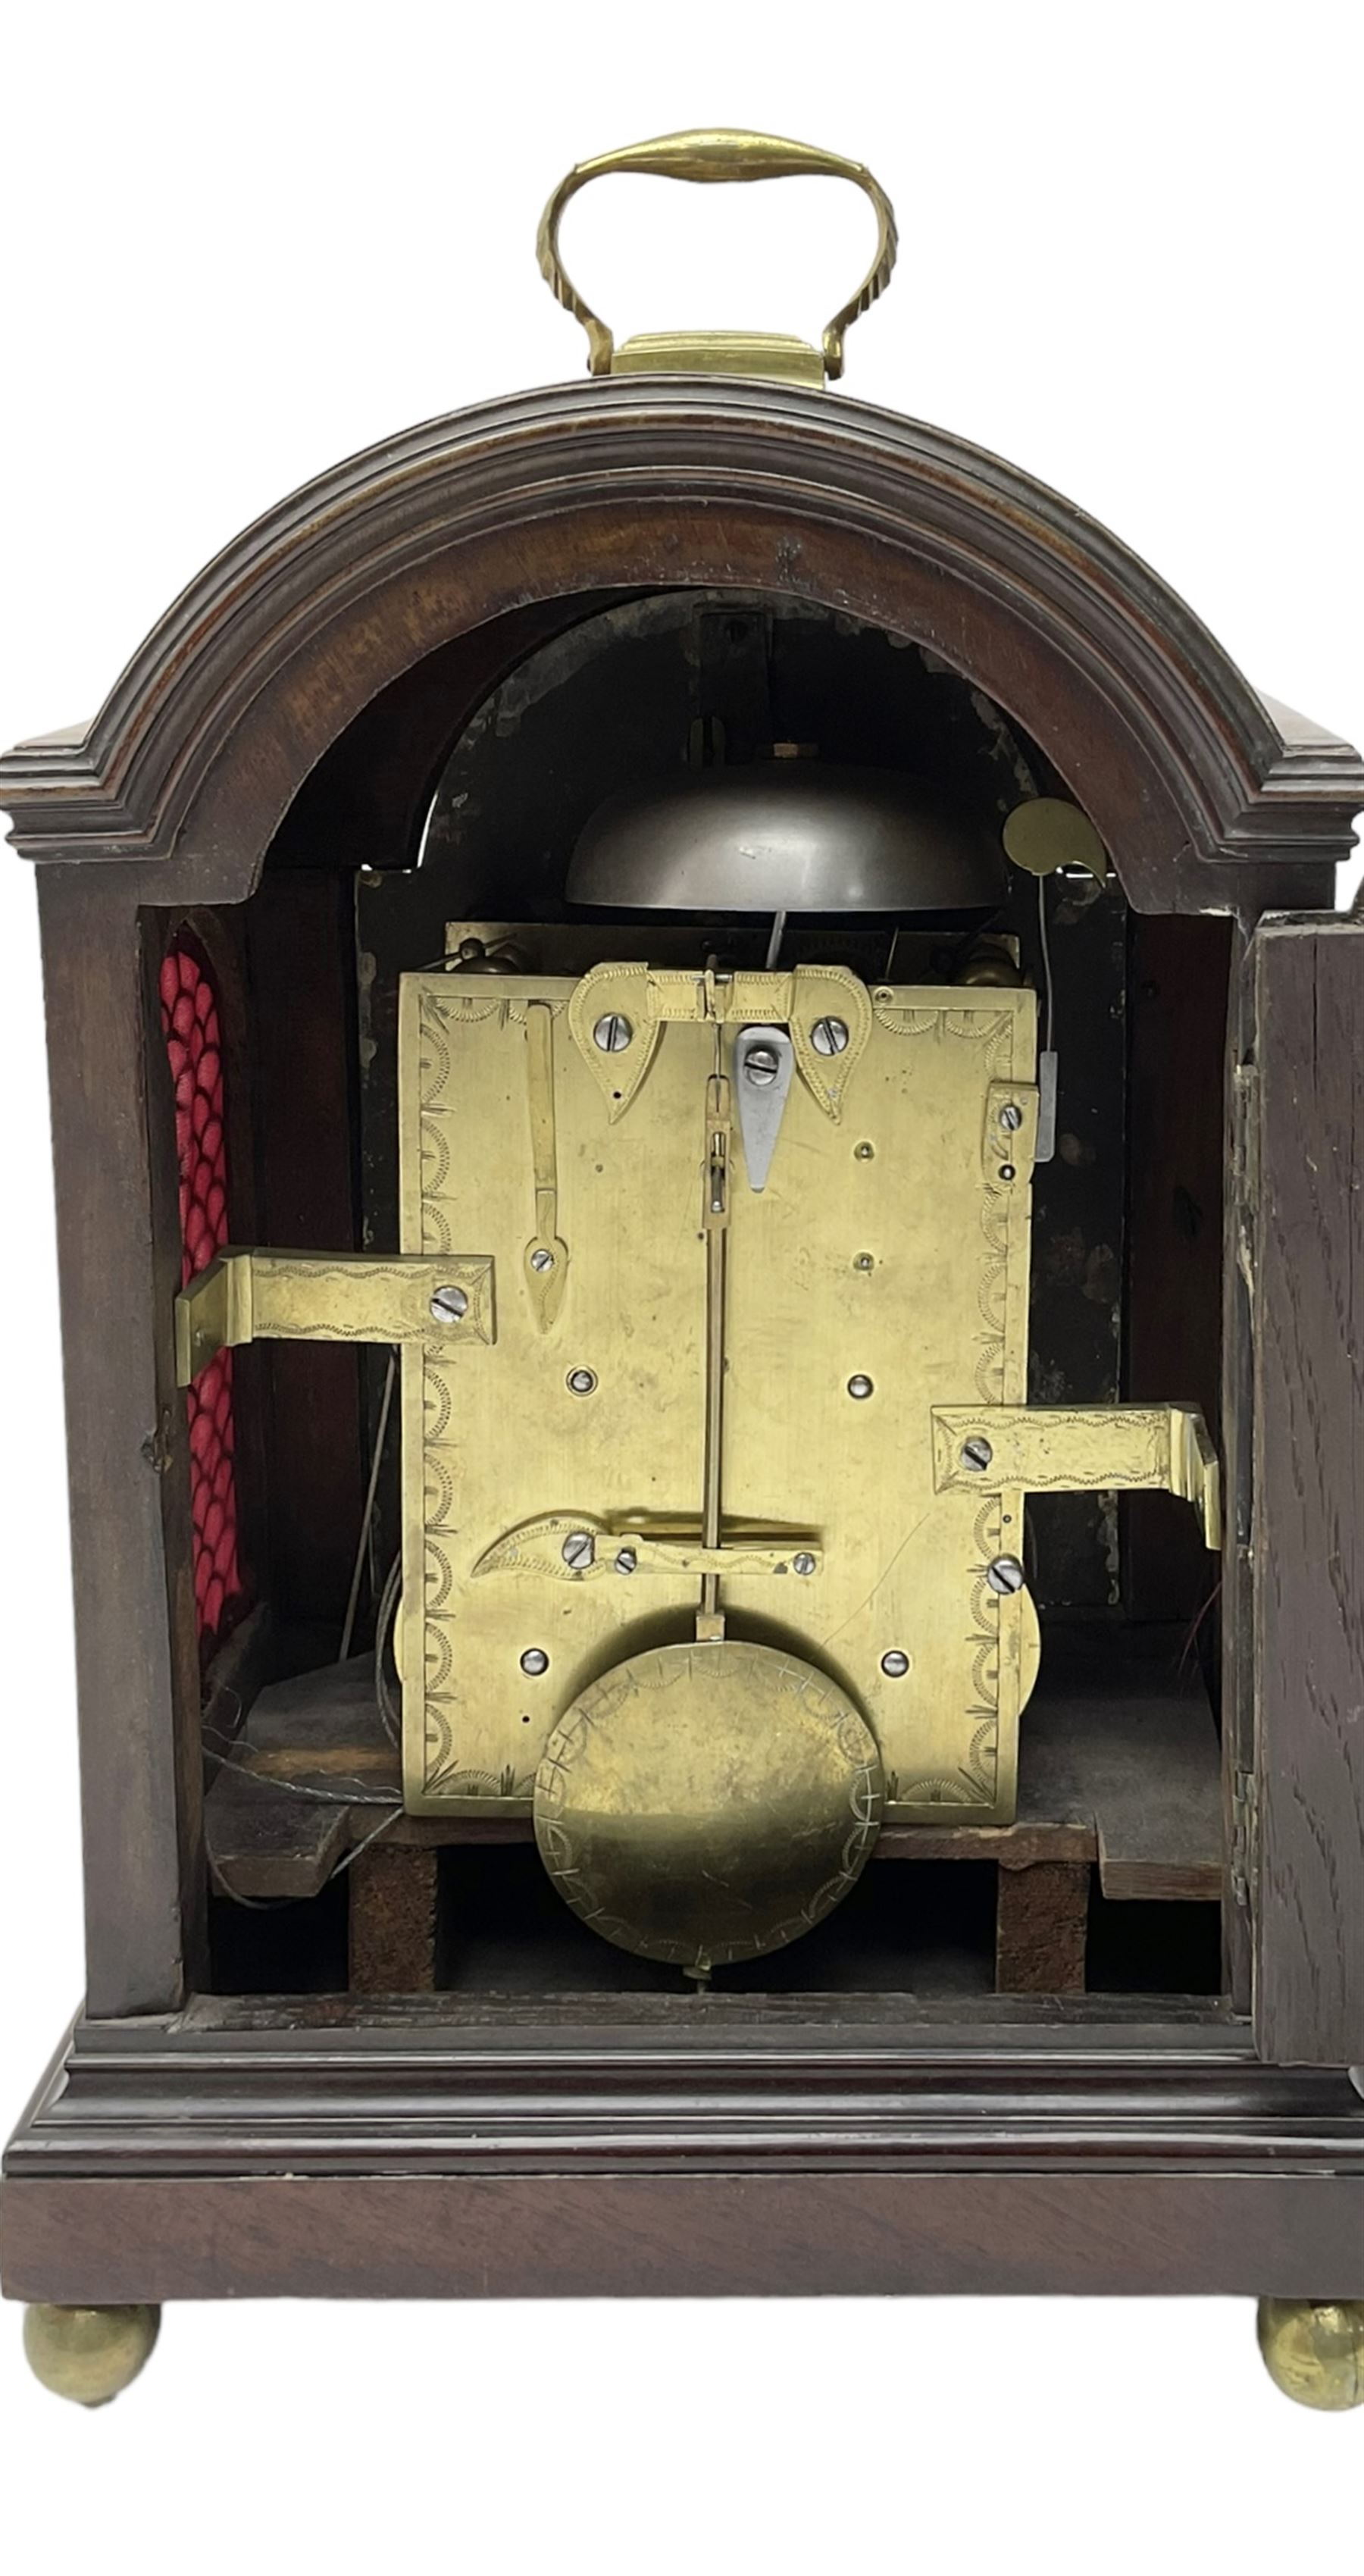 Robert Philip of London - English late 19th century 8-day mahogany cased bracket clock - Image 5 of 6